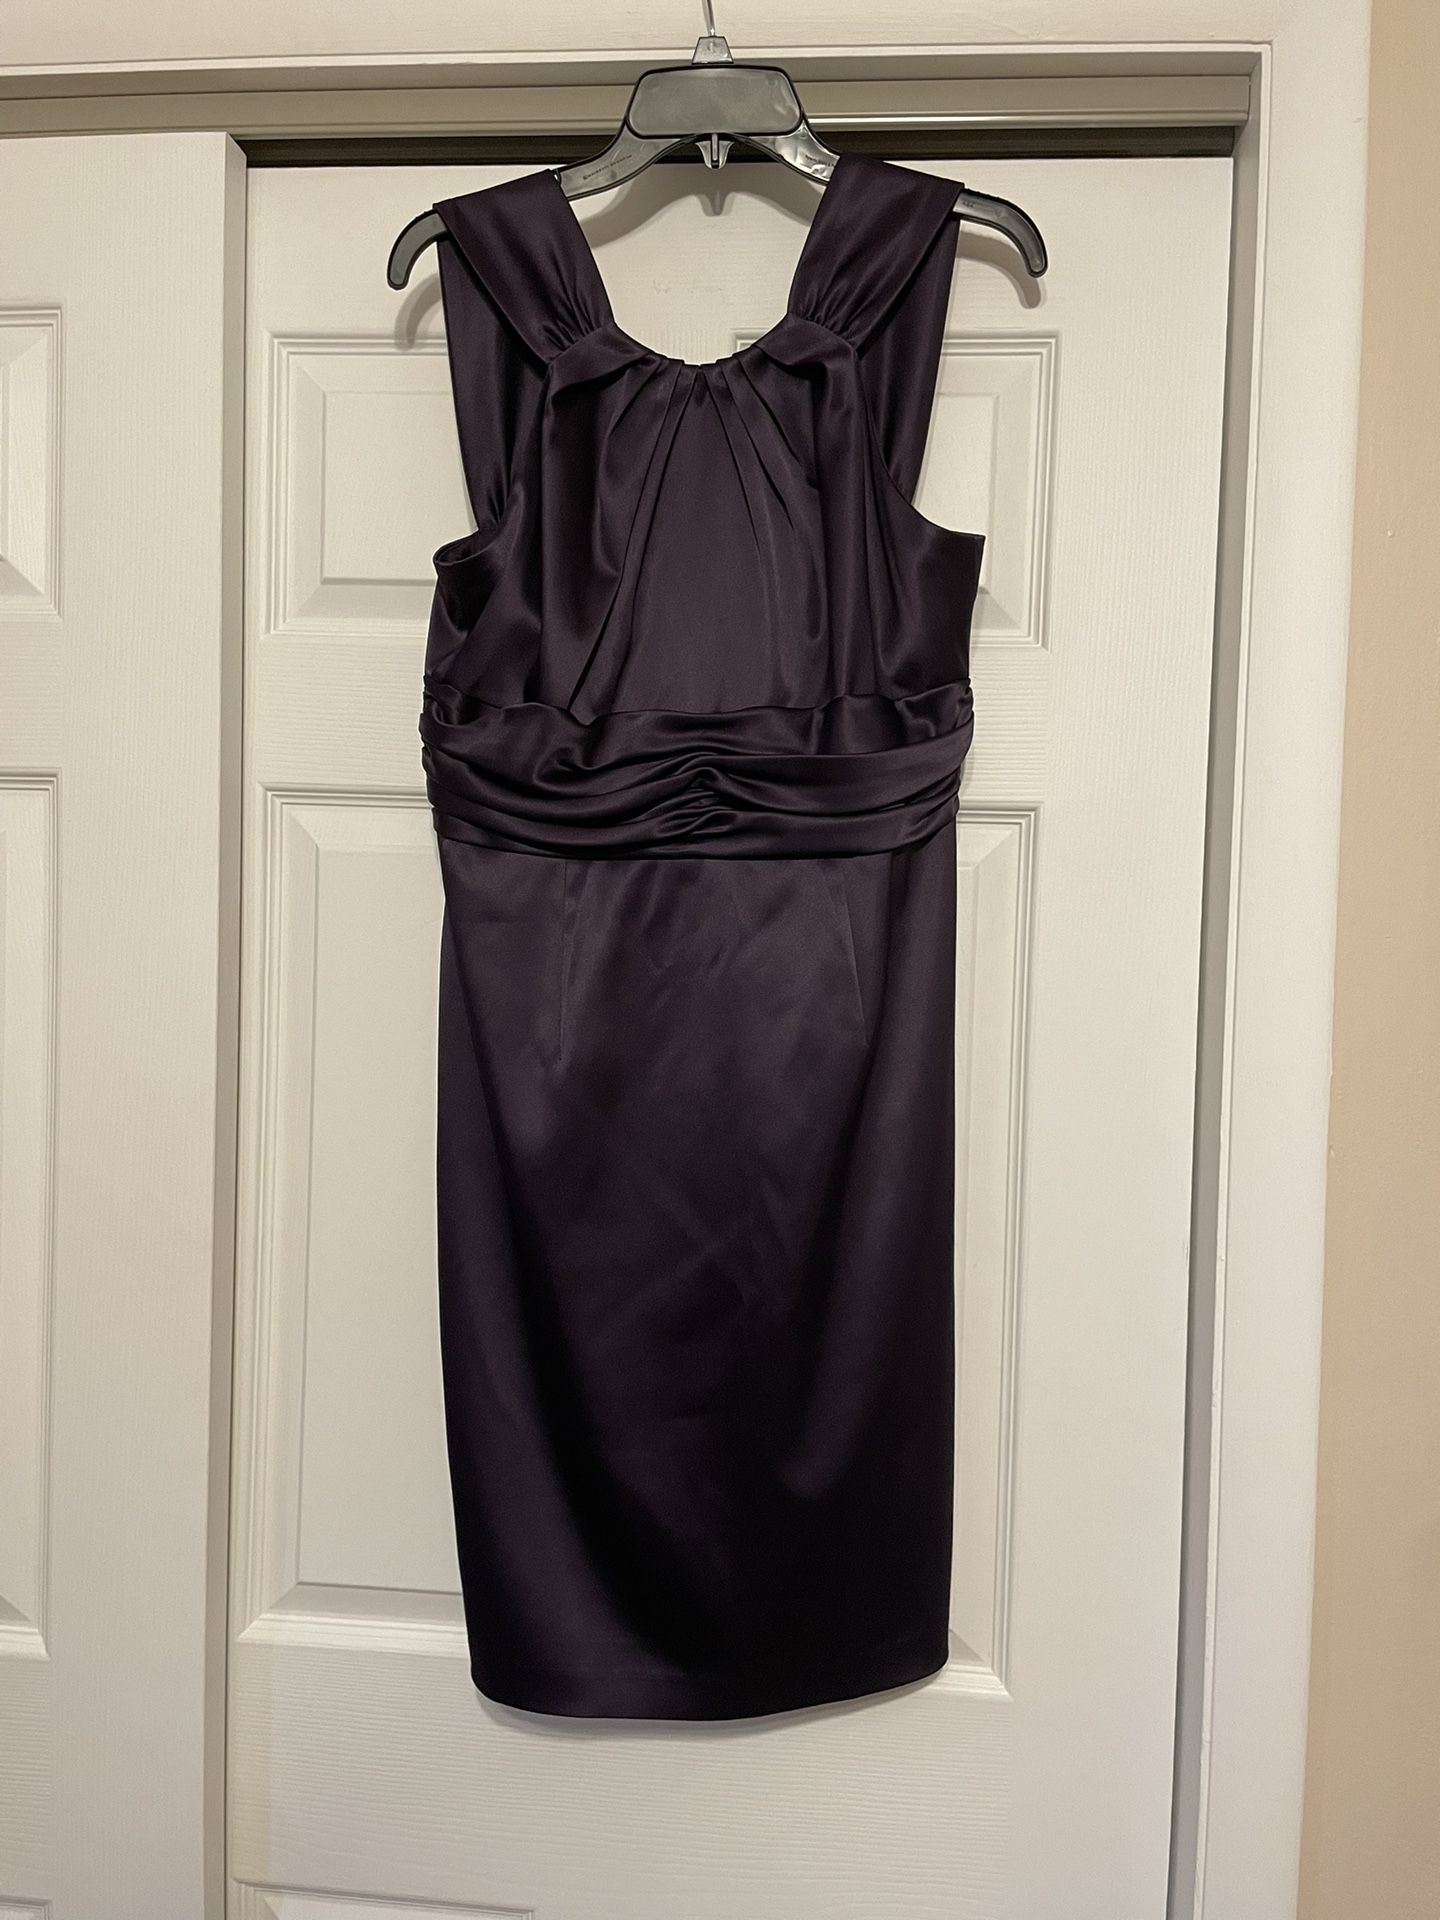 Eliza J purple satin cocktail dress - size 10P